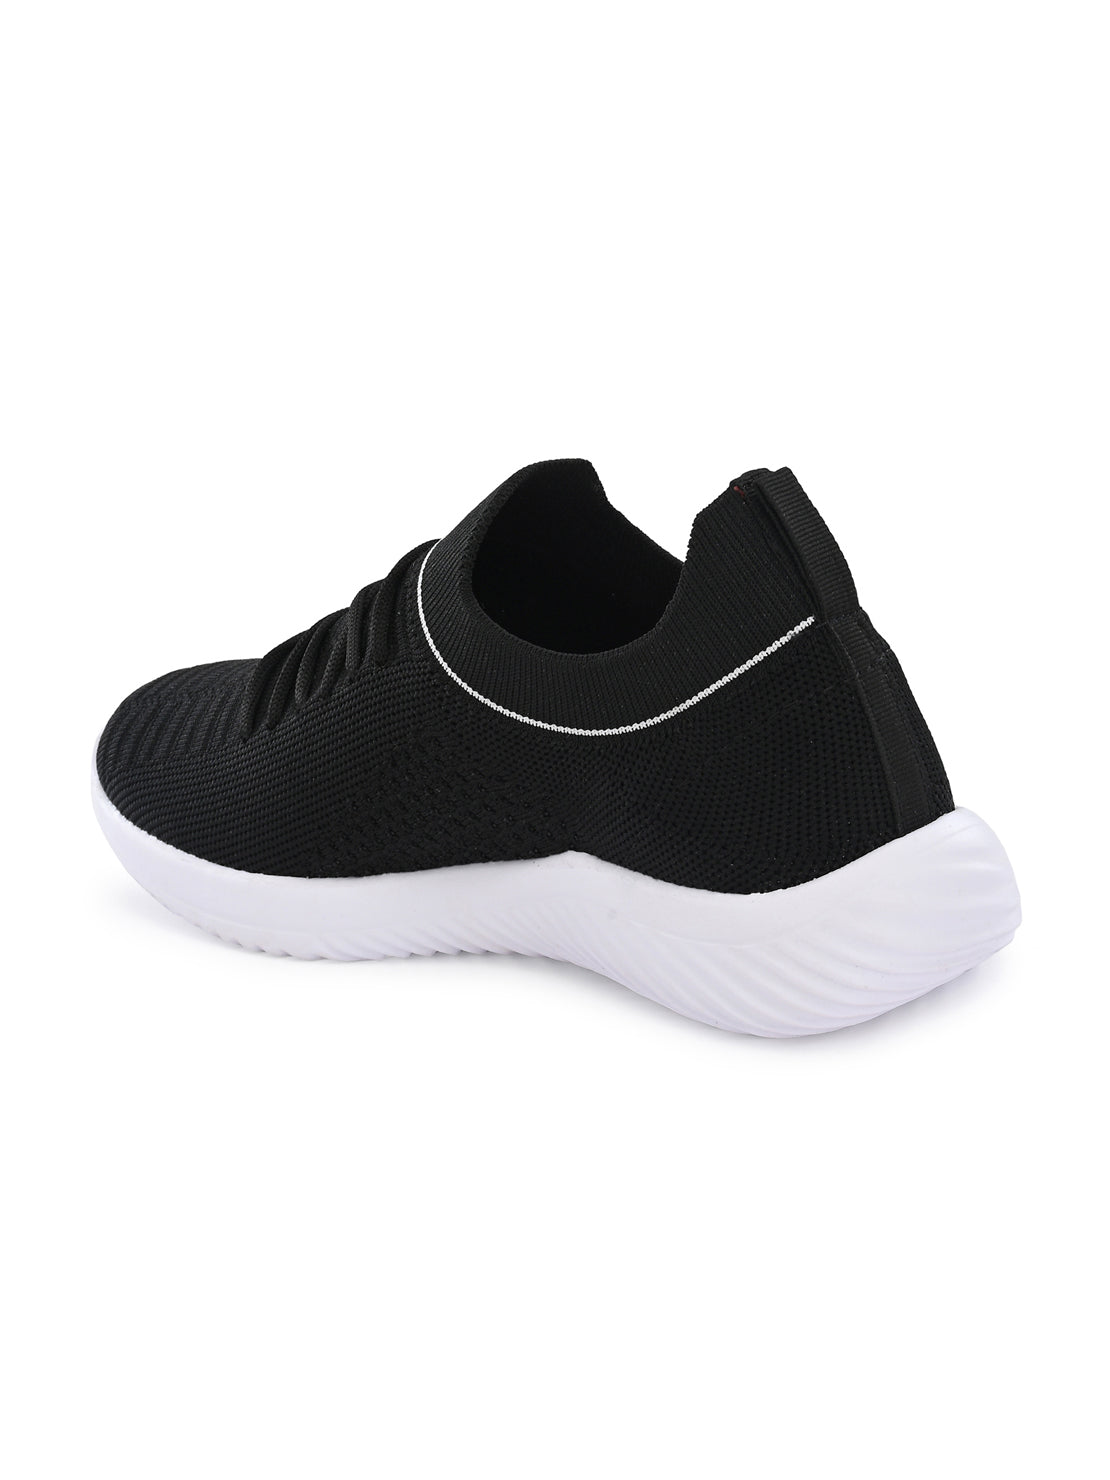 Hirolas® Women Black Casual Running Walking Jogging Gym comfortable Athletic Lace-Up Sports_Shoes (HRLWF01BLK)